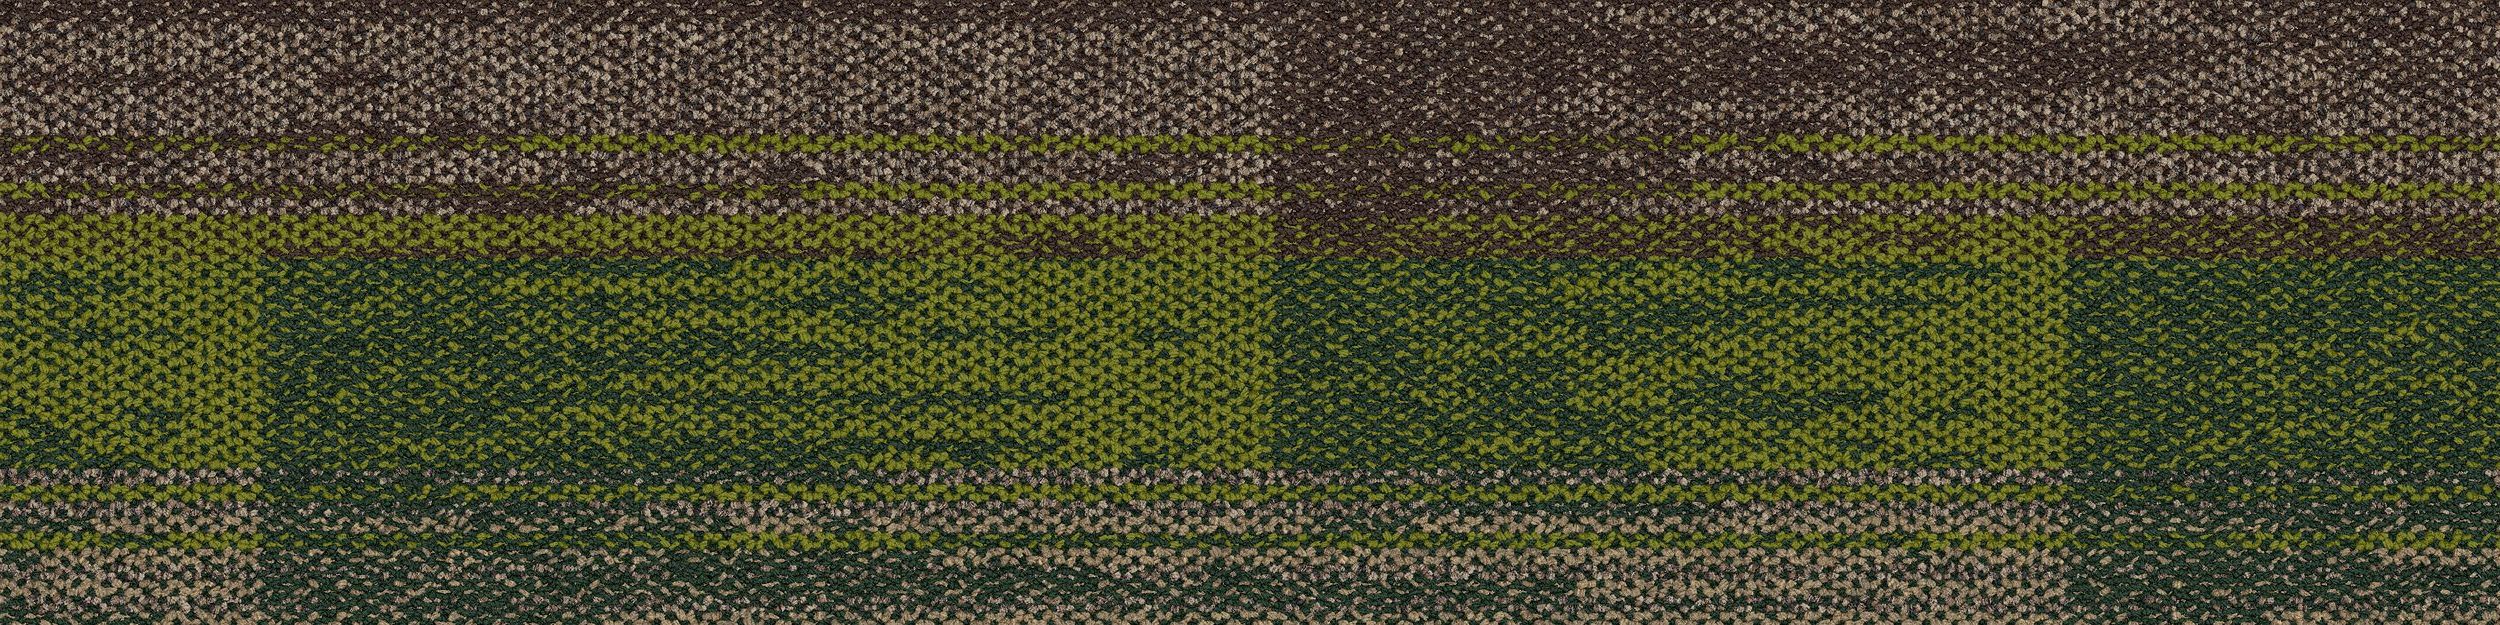 AE315 Carpet Tile In Mushroom/Grass numéro d’image 2